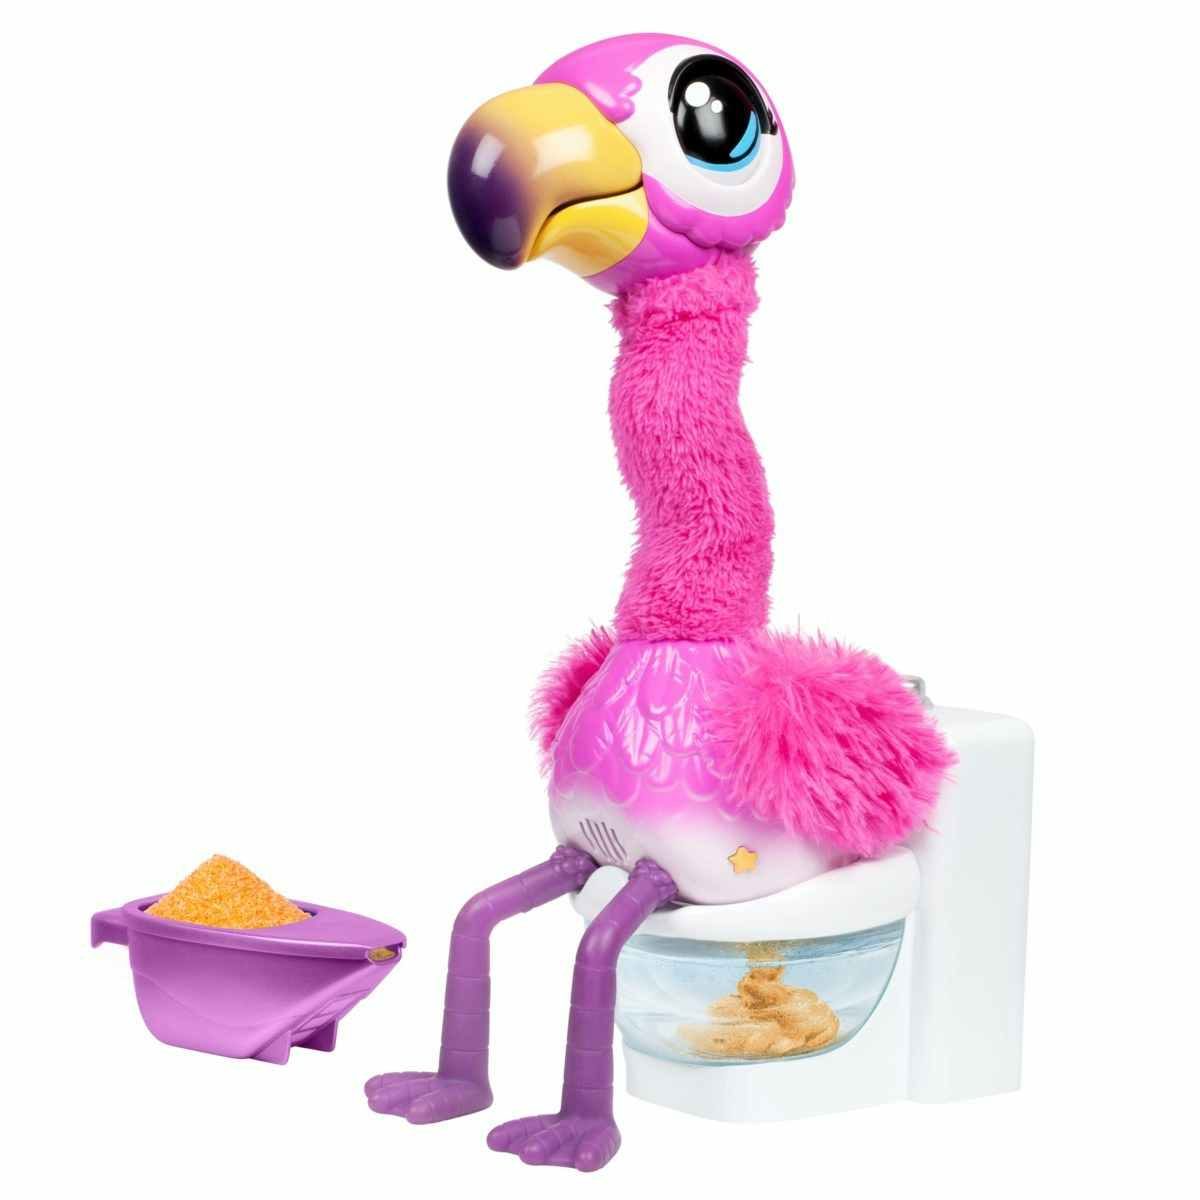 A Gotta Go Flamingo toy.